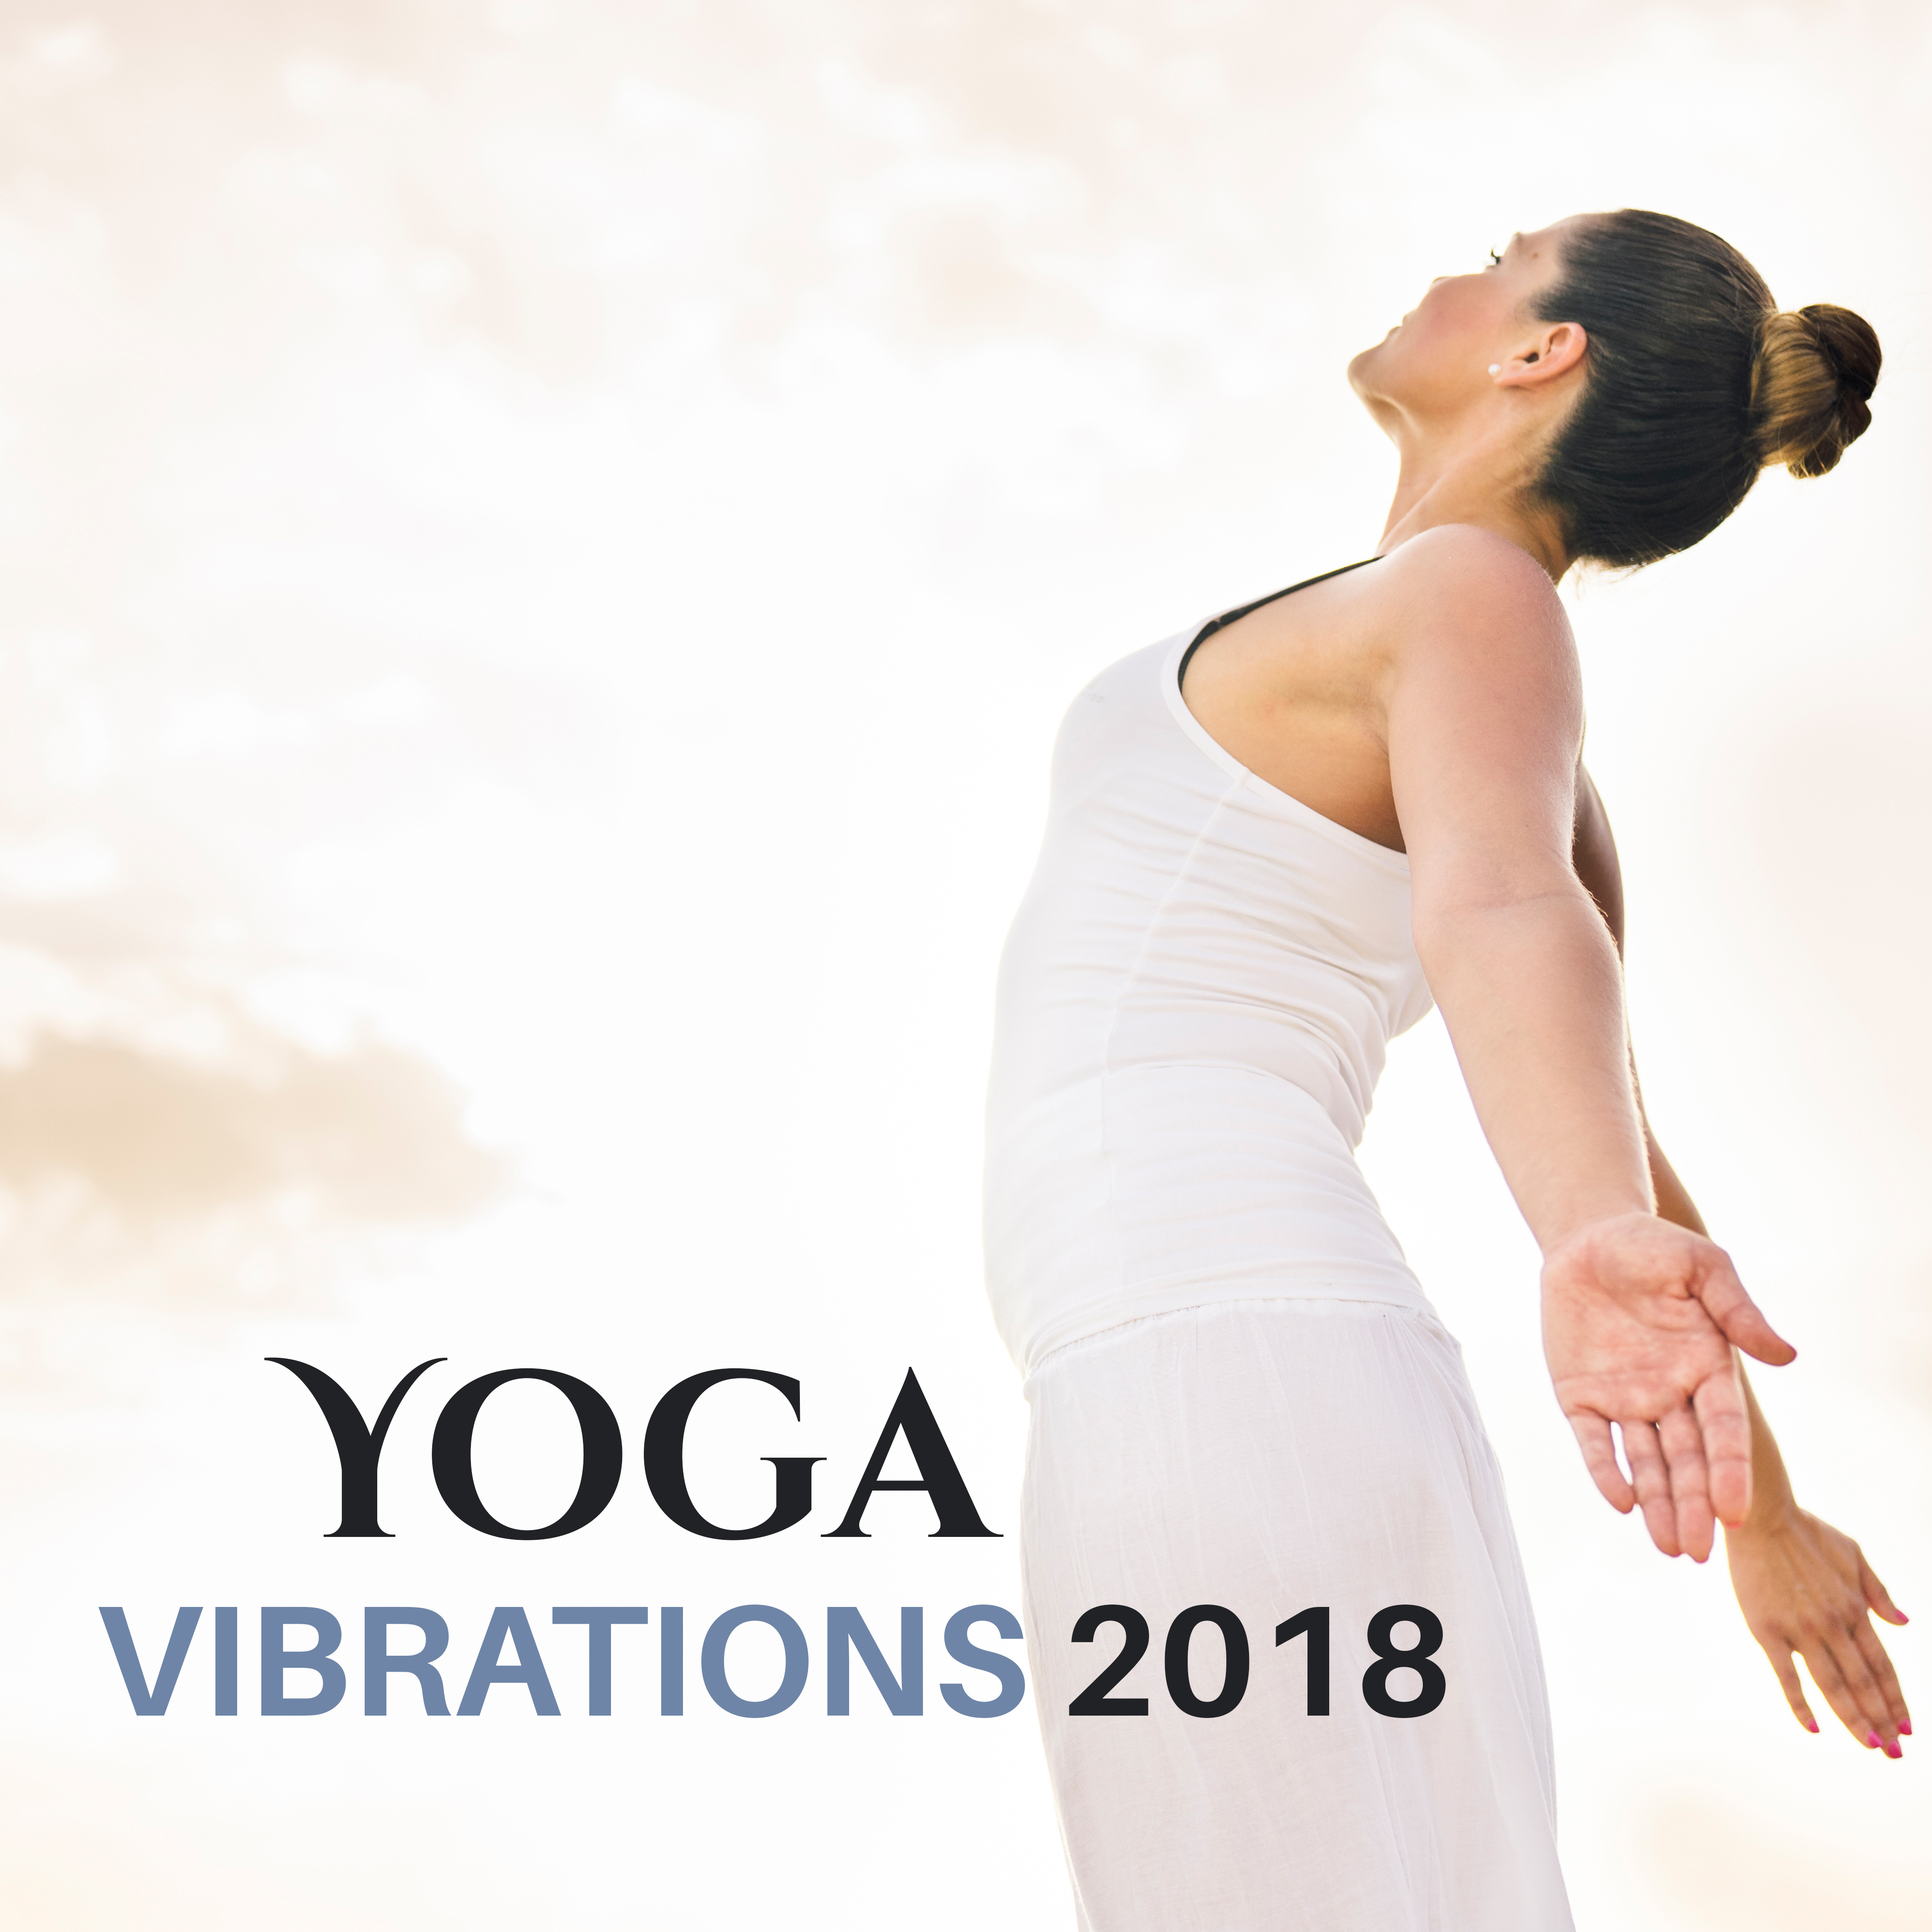 Yoga Vibrations 2018